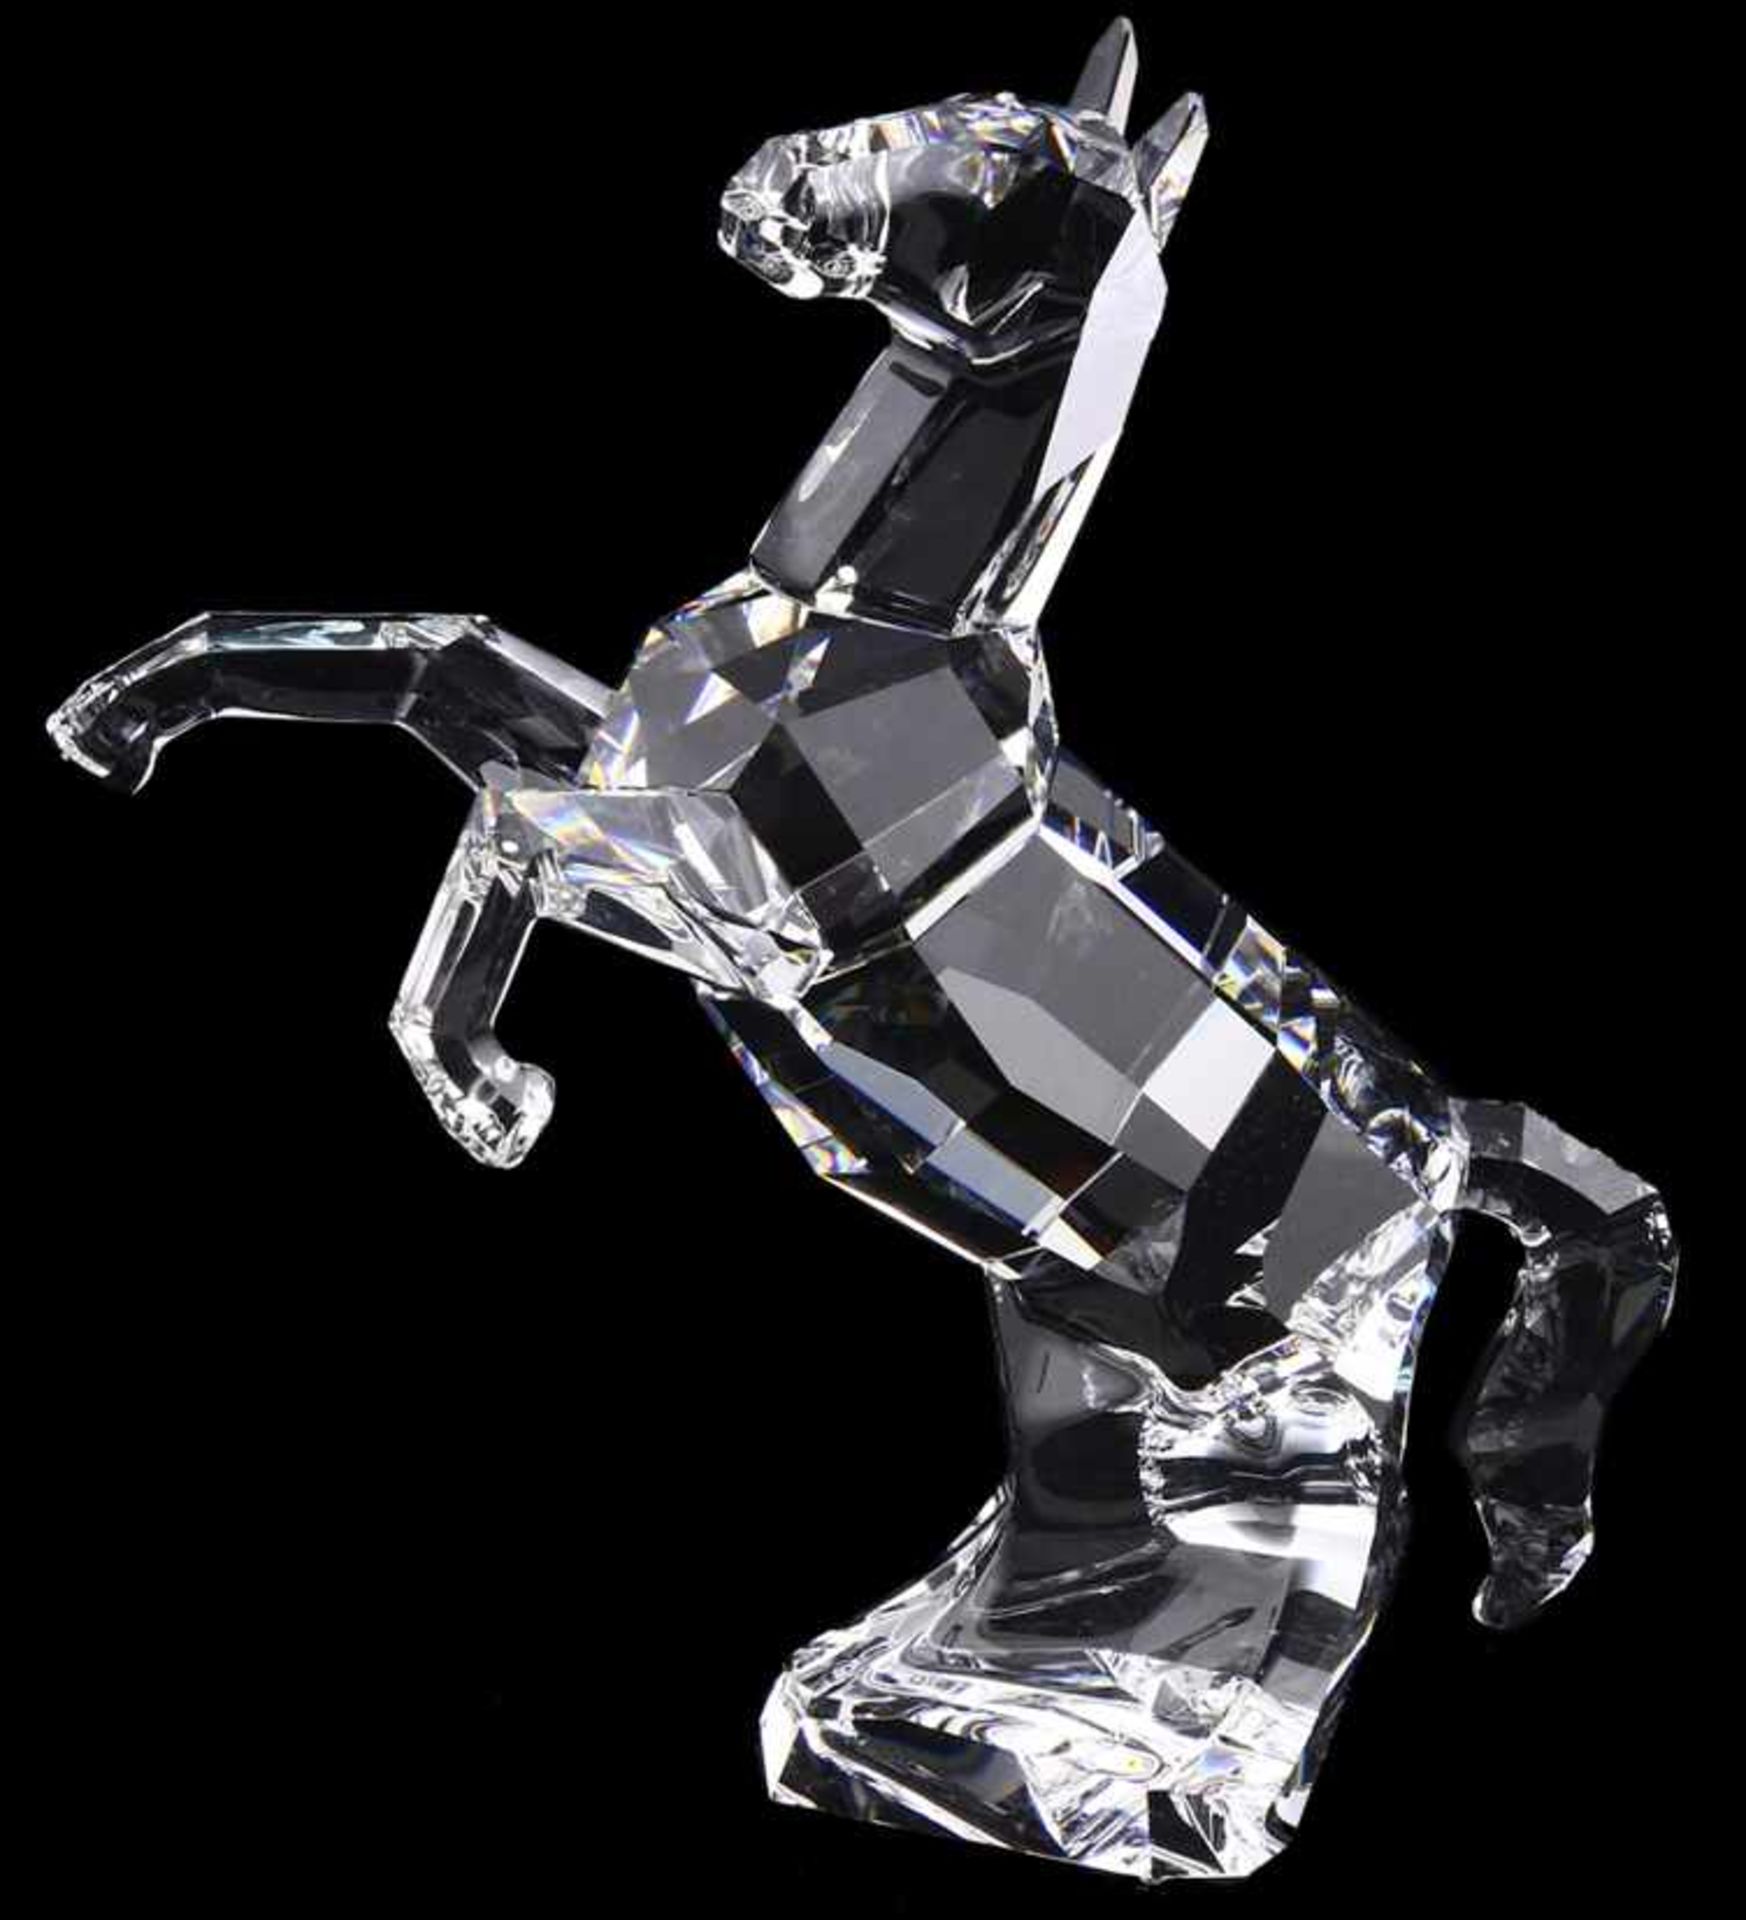 Swarovski: Paard, in helder geslepen kristal met grote facetten die het object een moderne en